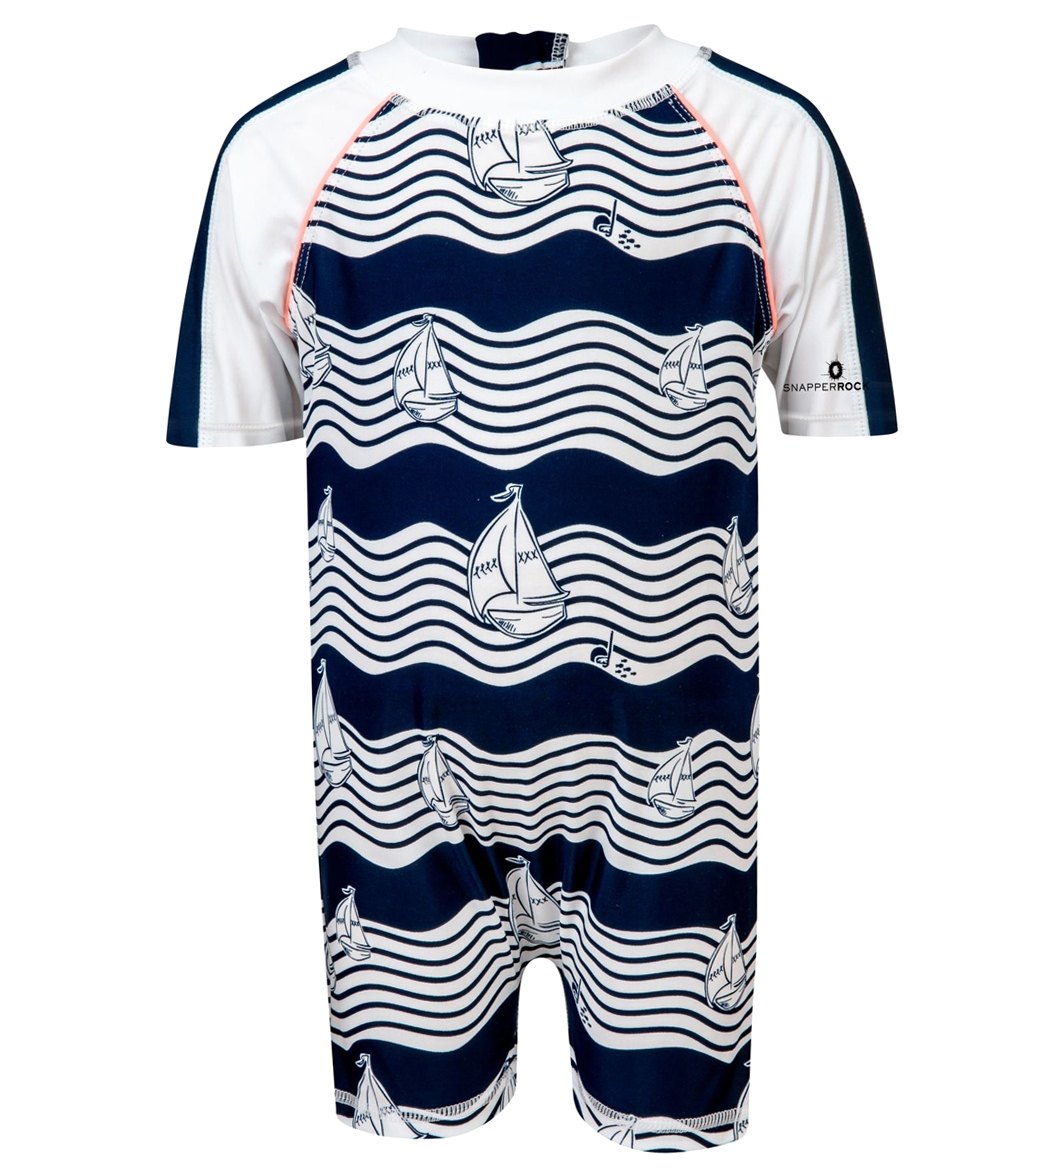 Snapper Rock Boys' Short Sleeve Sunsuit Baby - Navy/White/Multi 6M-12M - Swimoutlet.com